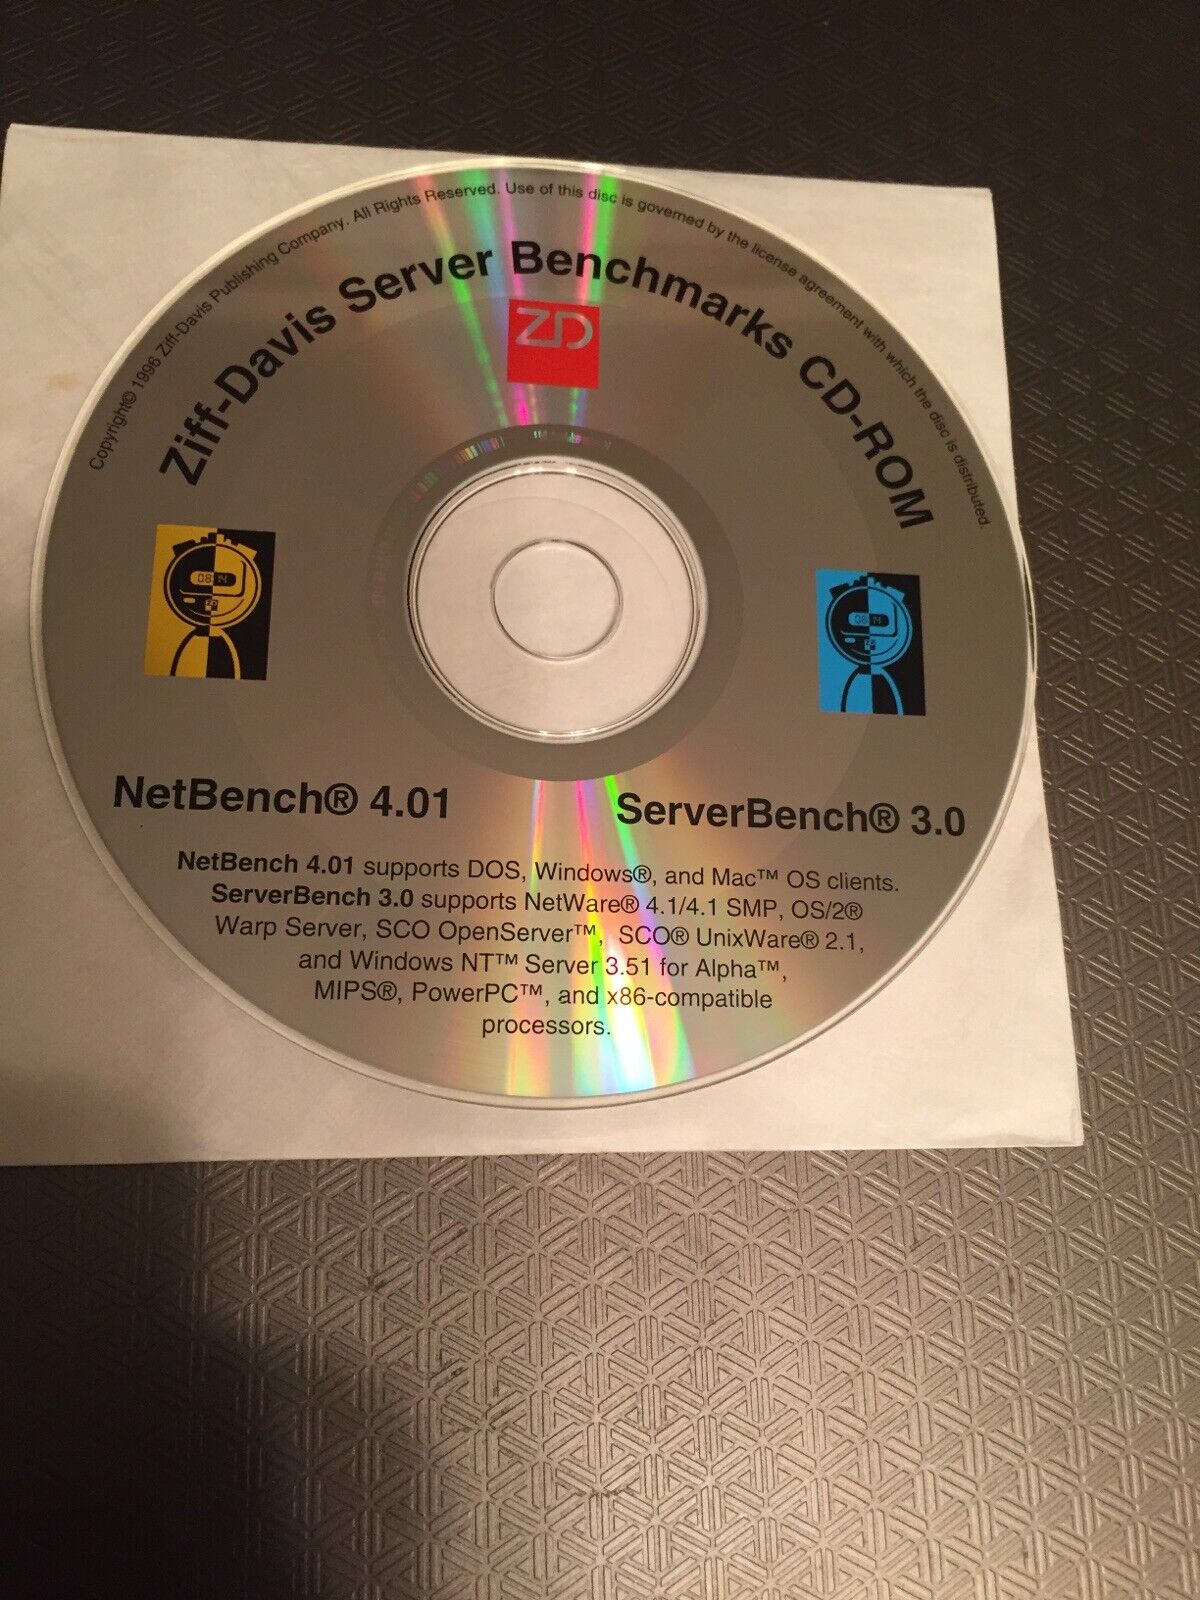 Ziff-Davis Server Benchmarks, NetBench 4.01, ServerBench 3.0 For Windows And Mac